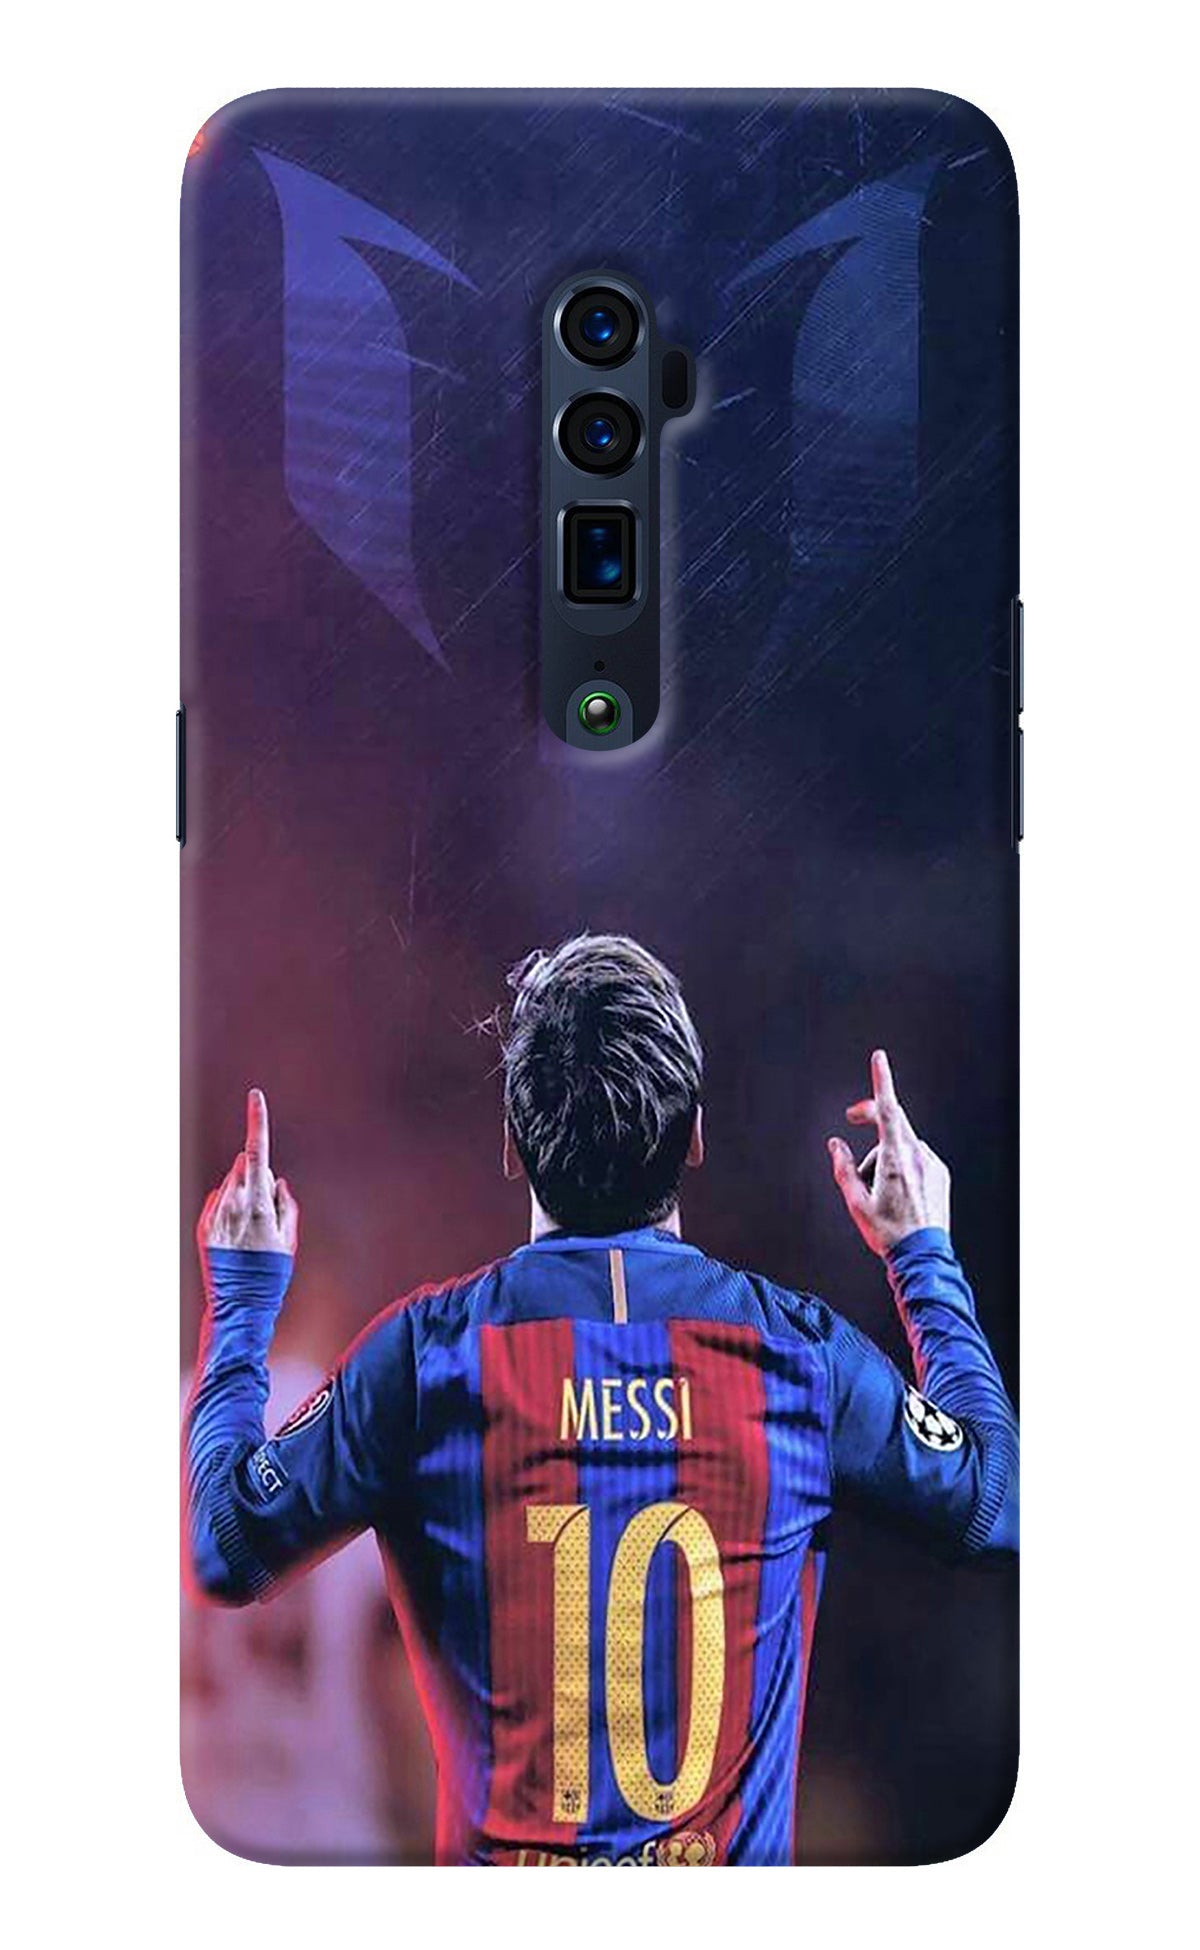 Messi Oppo Reno 10x Zoom Back Cover